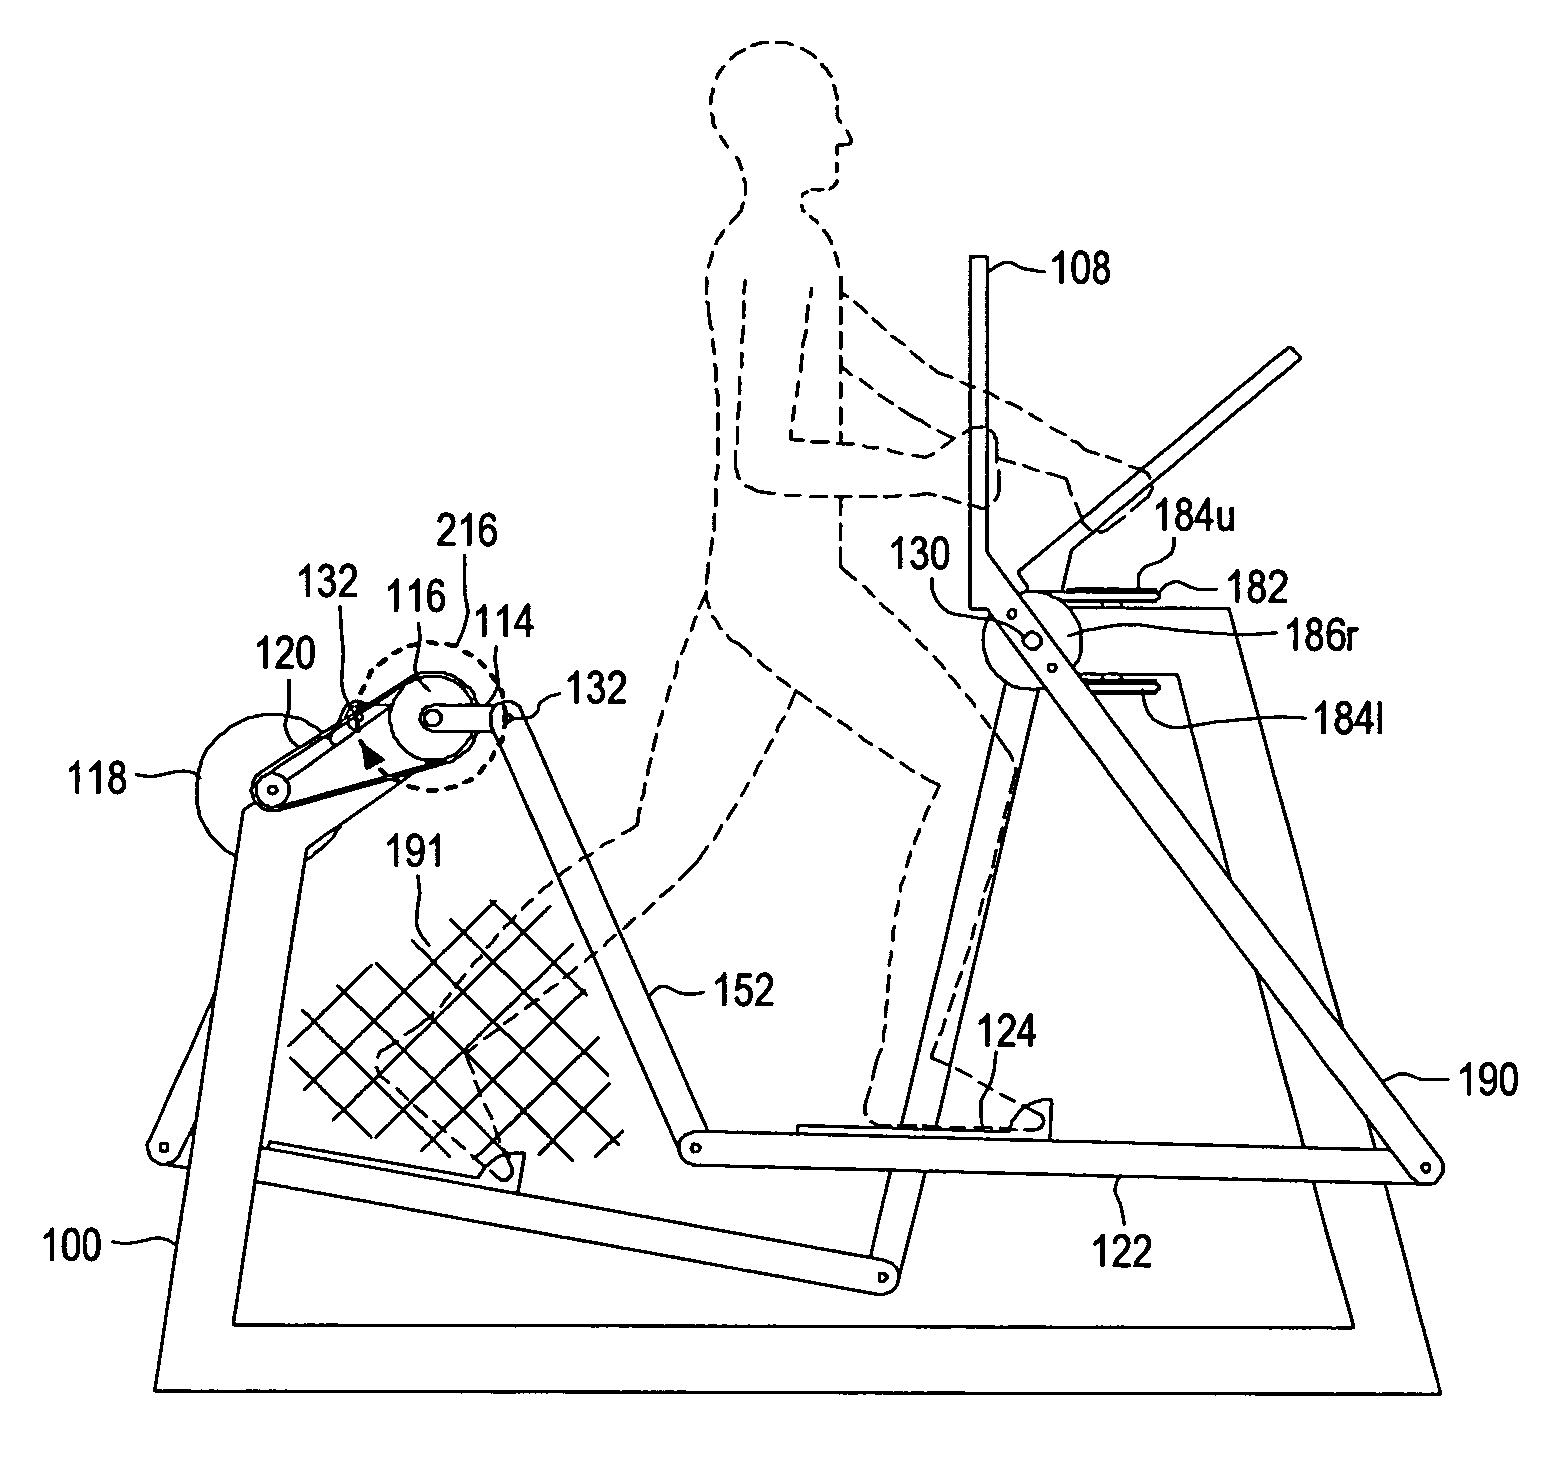 Pendulum striding exercise devices